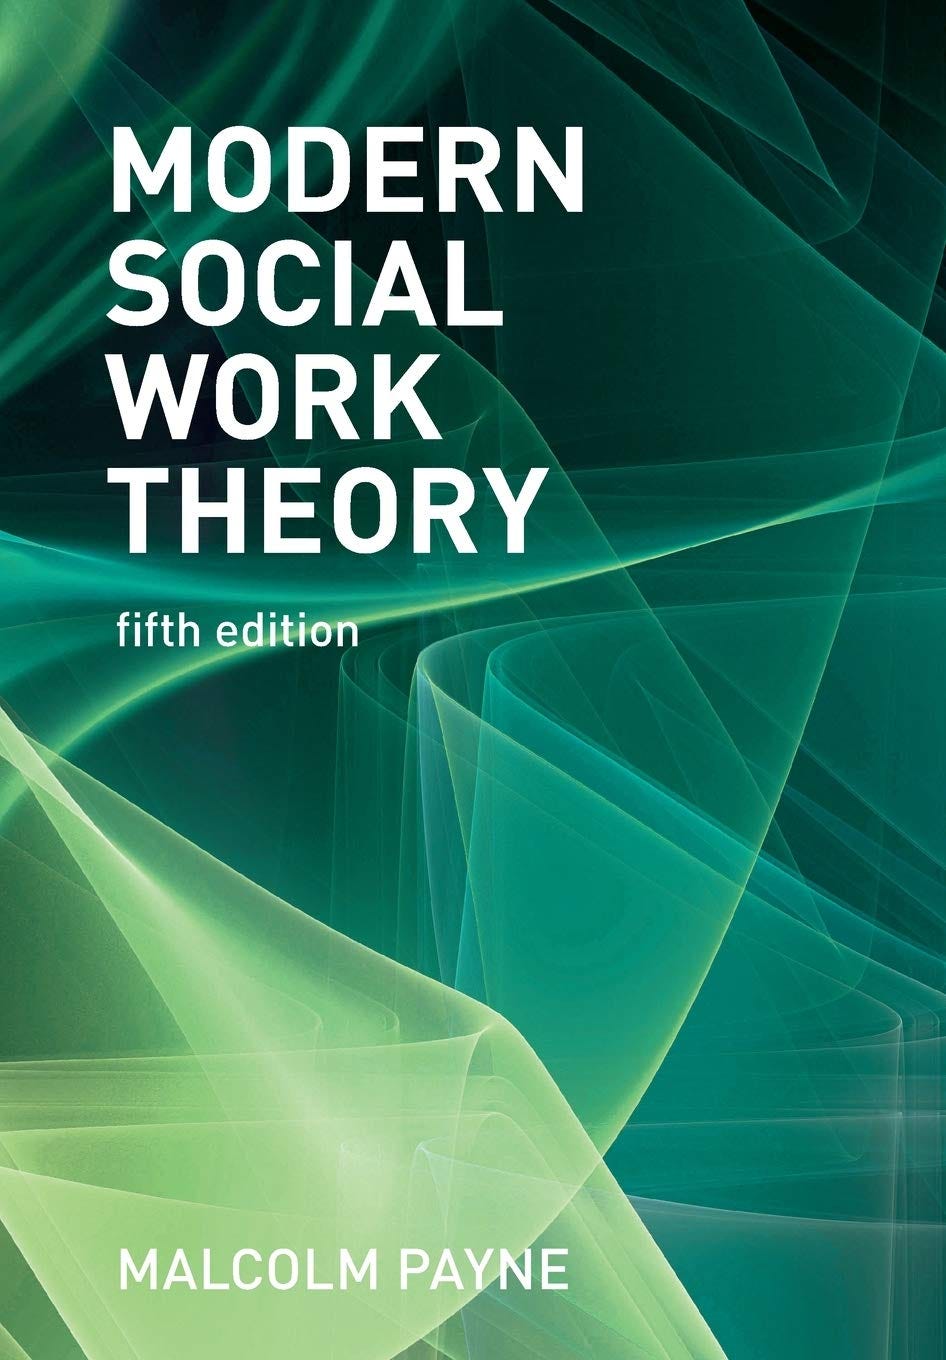 Modern Social Work Theory: Amazon.co.uk: Malcolm Payne: 9781352011081: Books